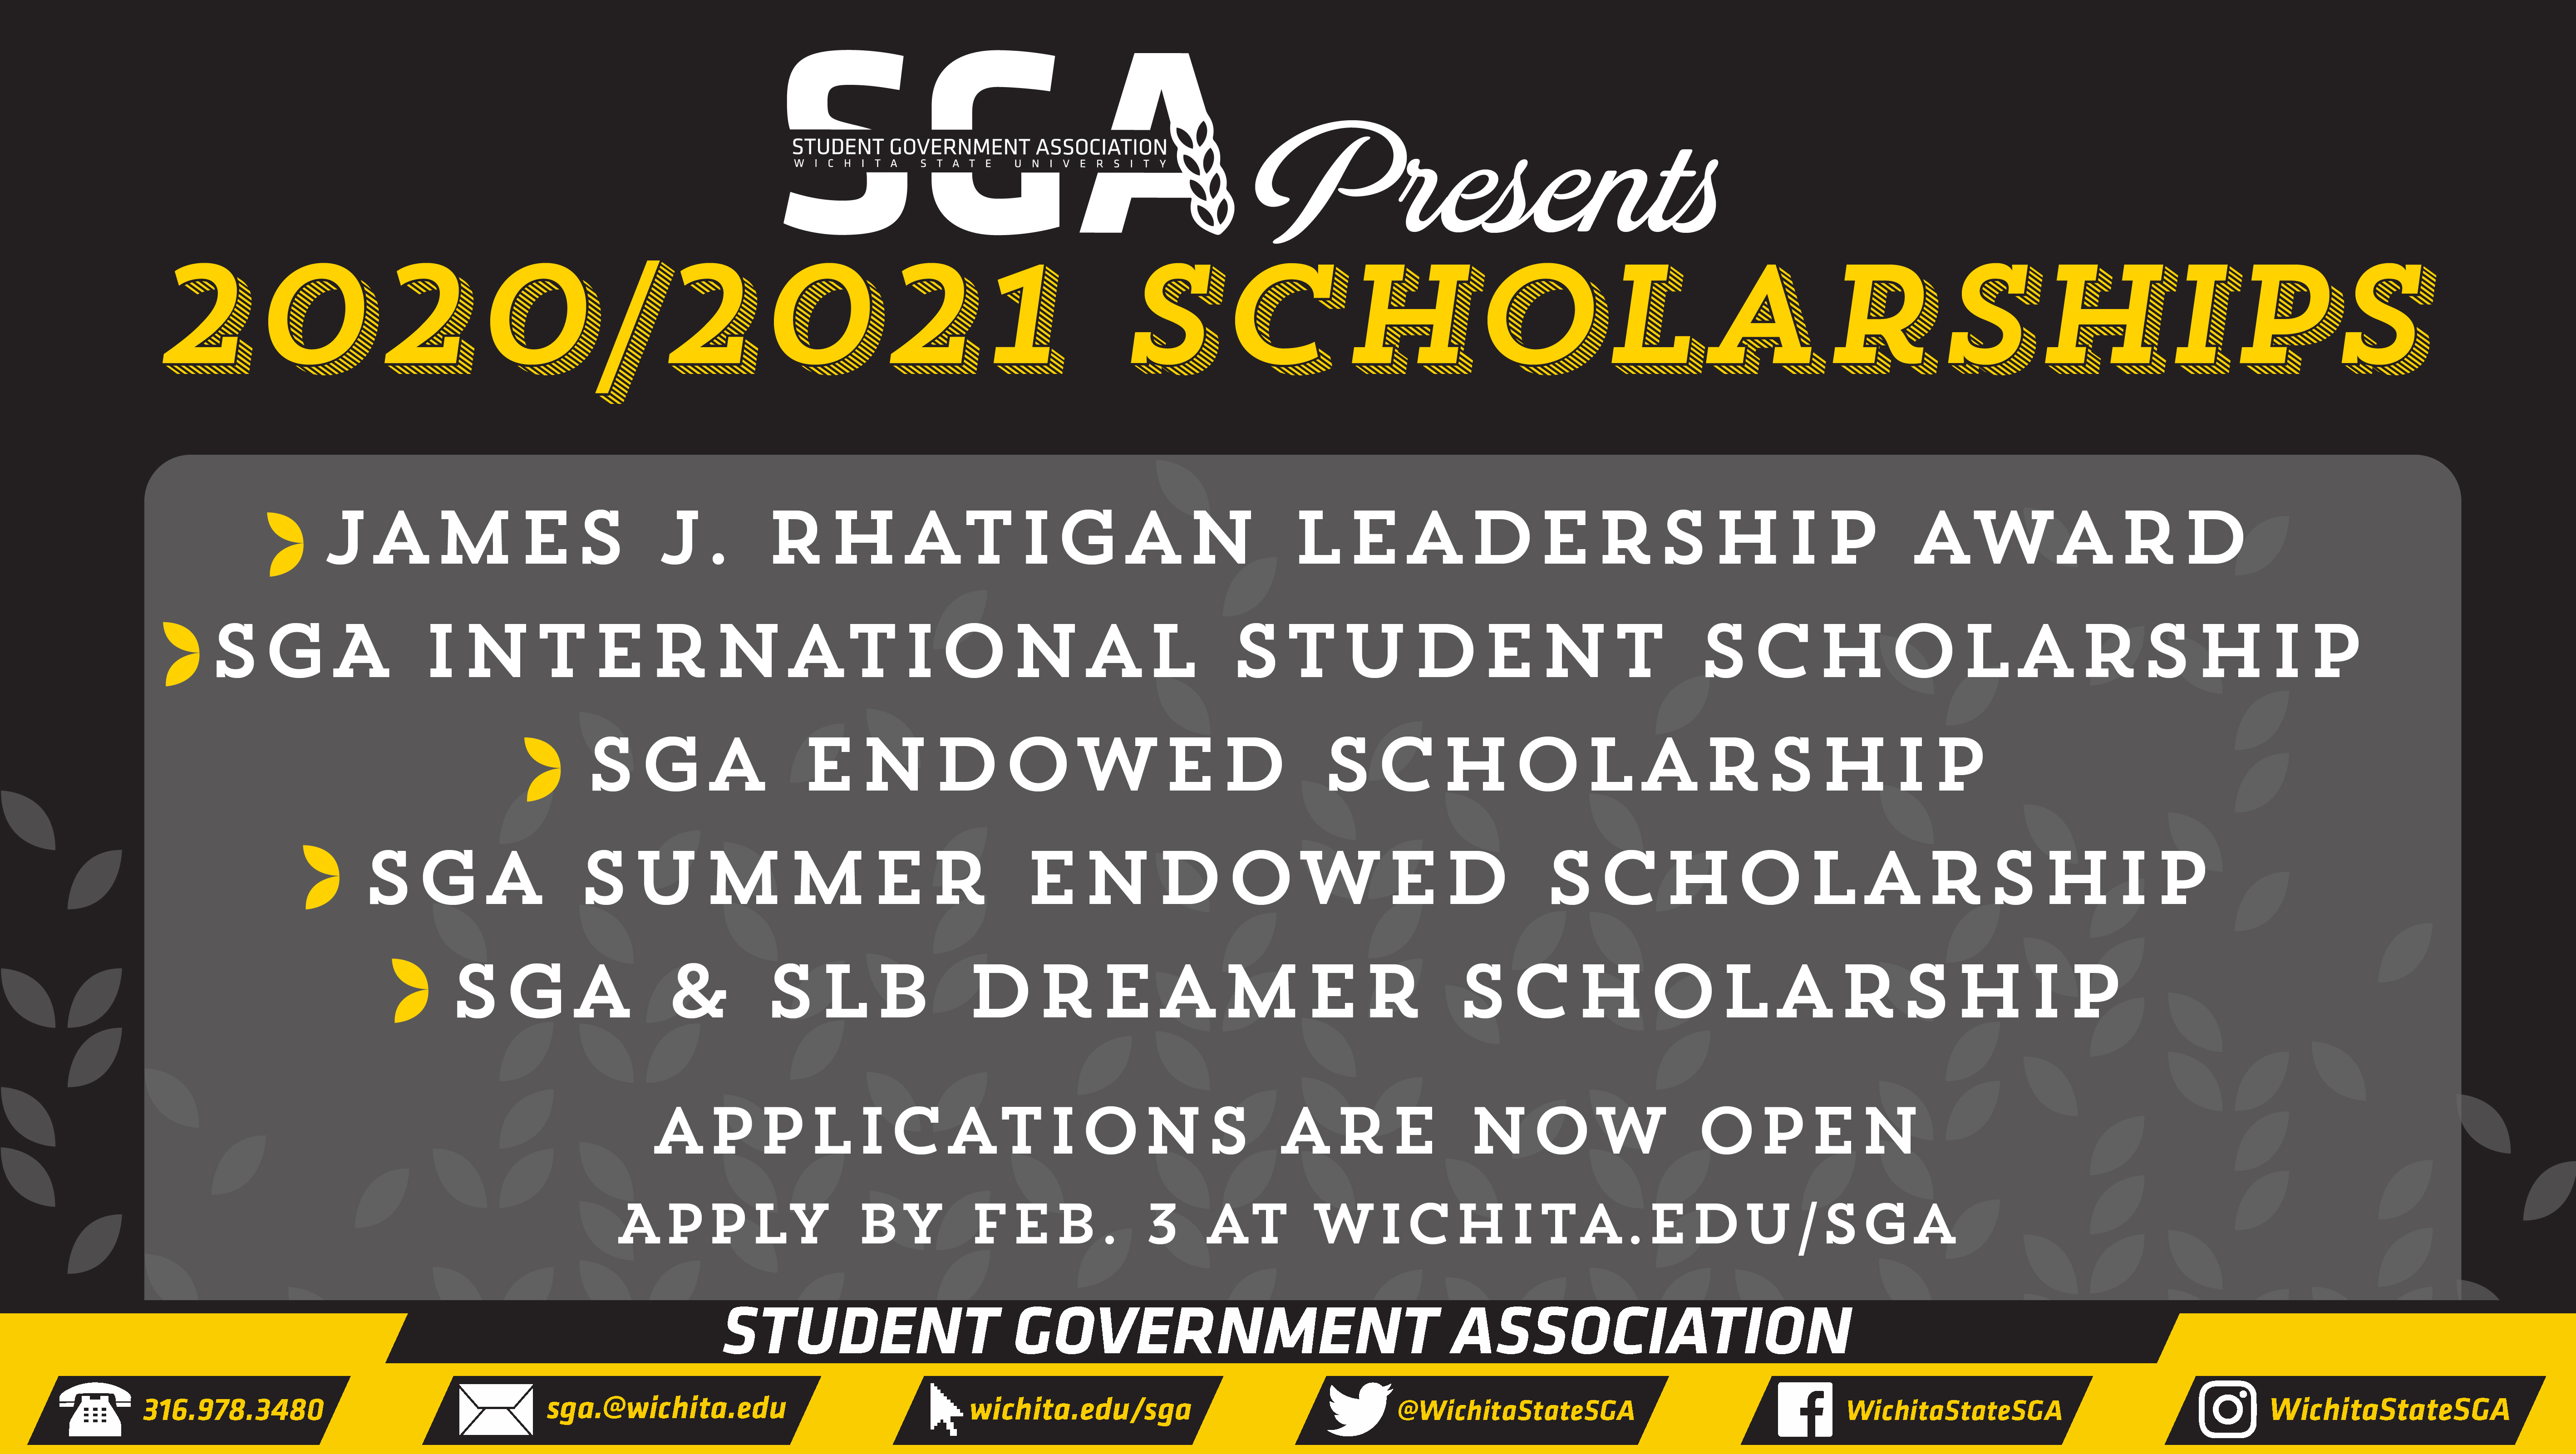 Apply to SGA scholarships